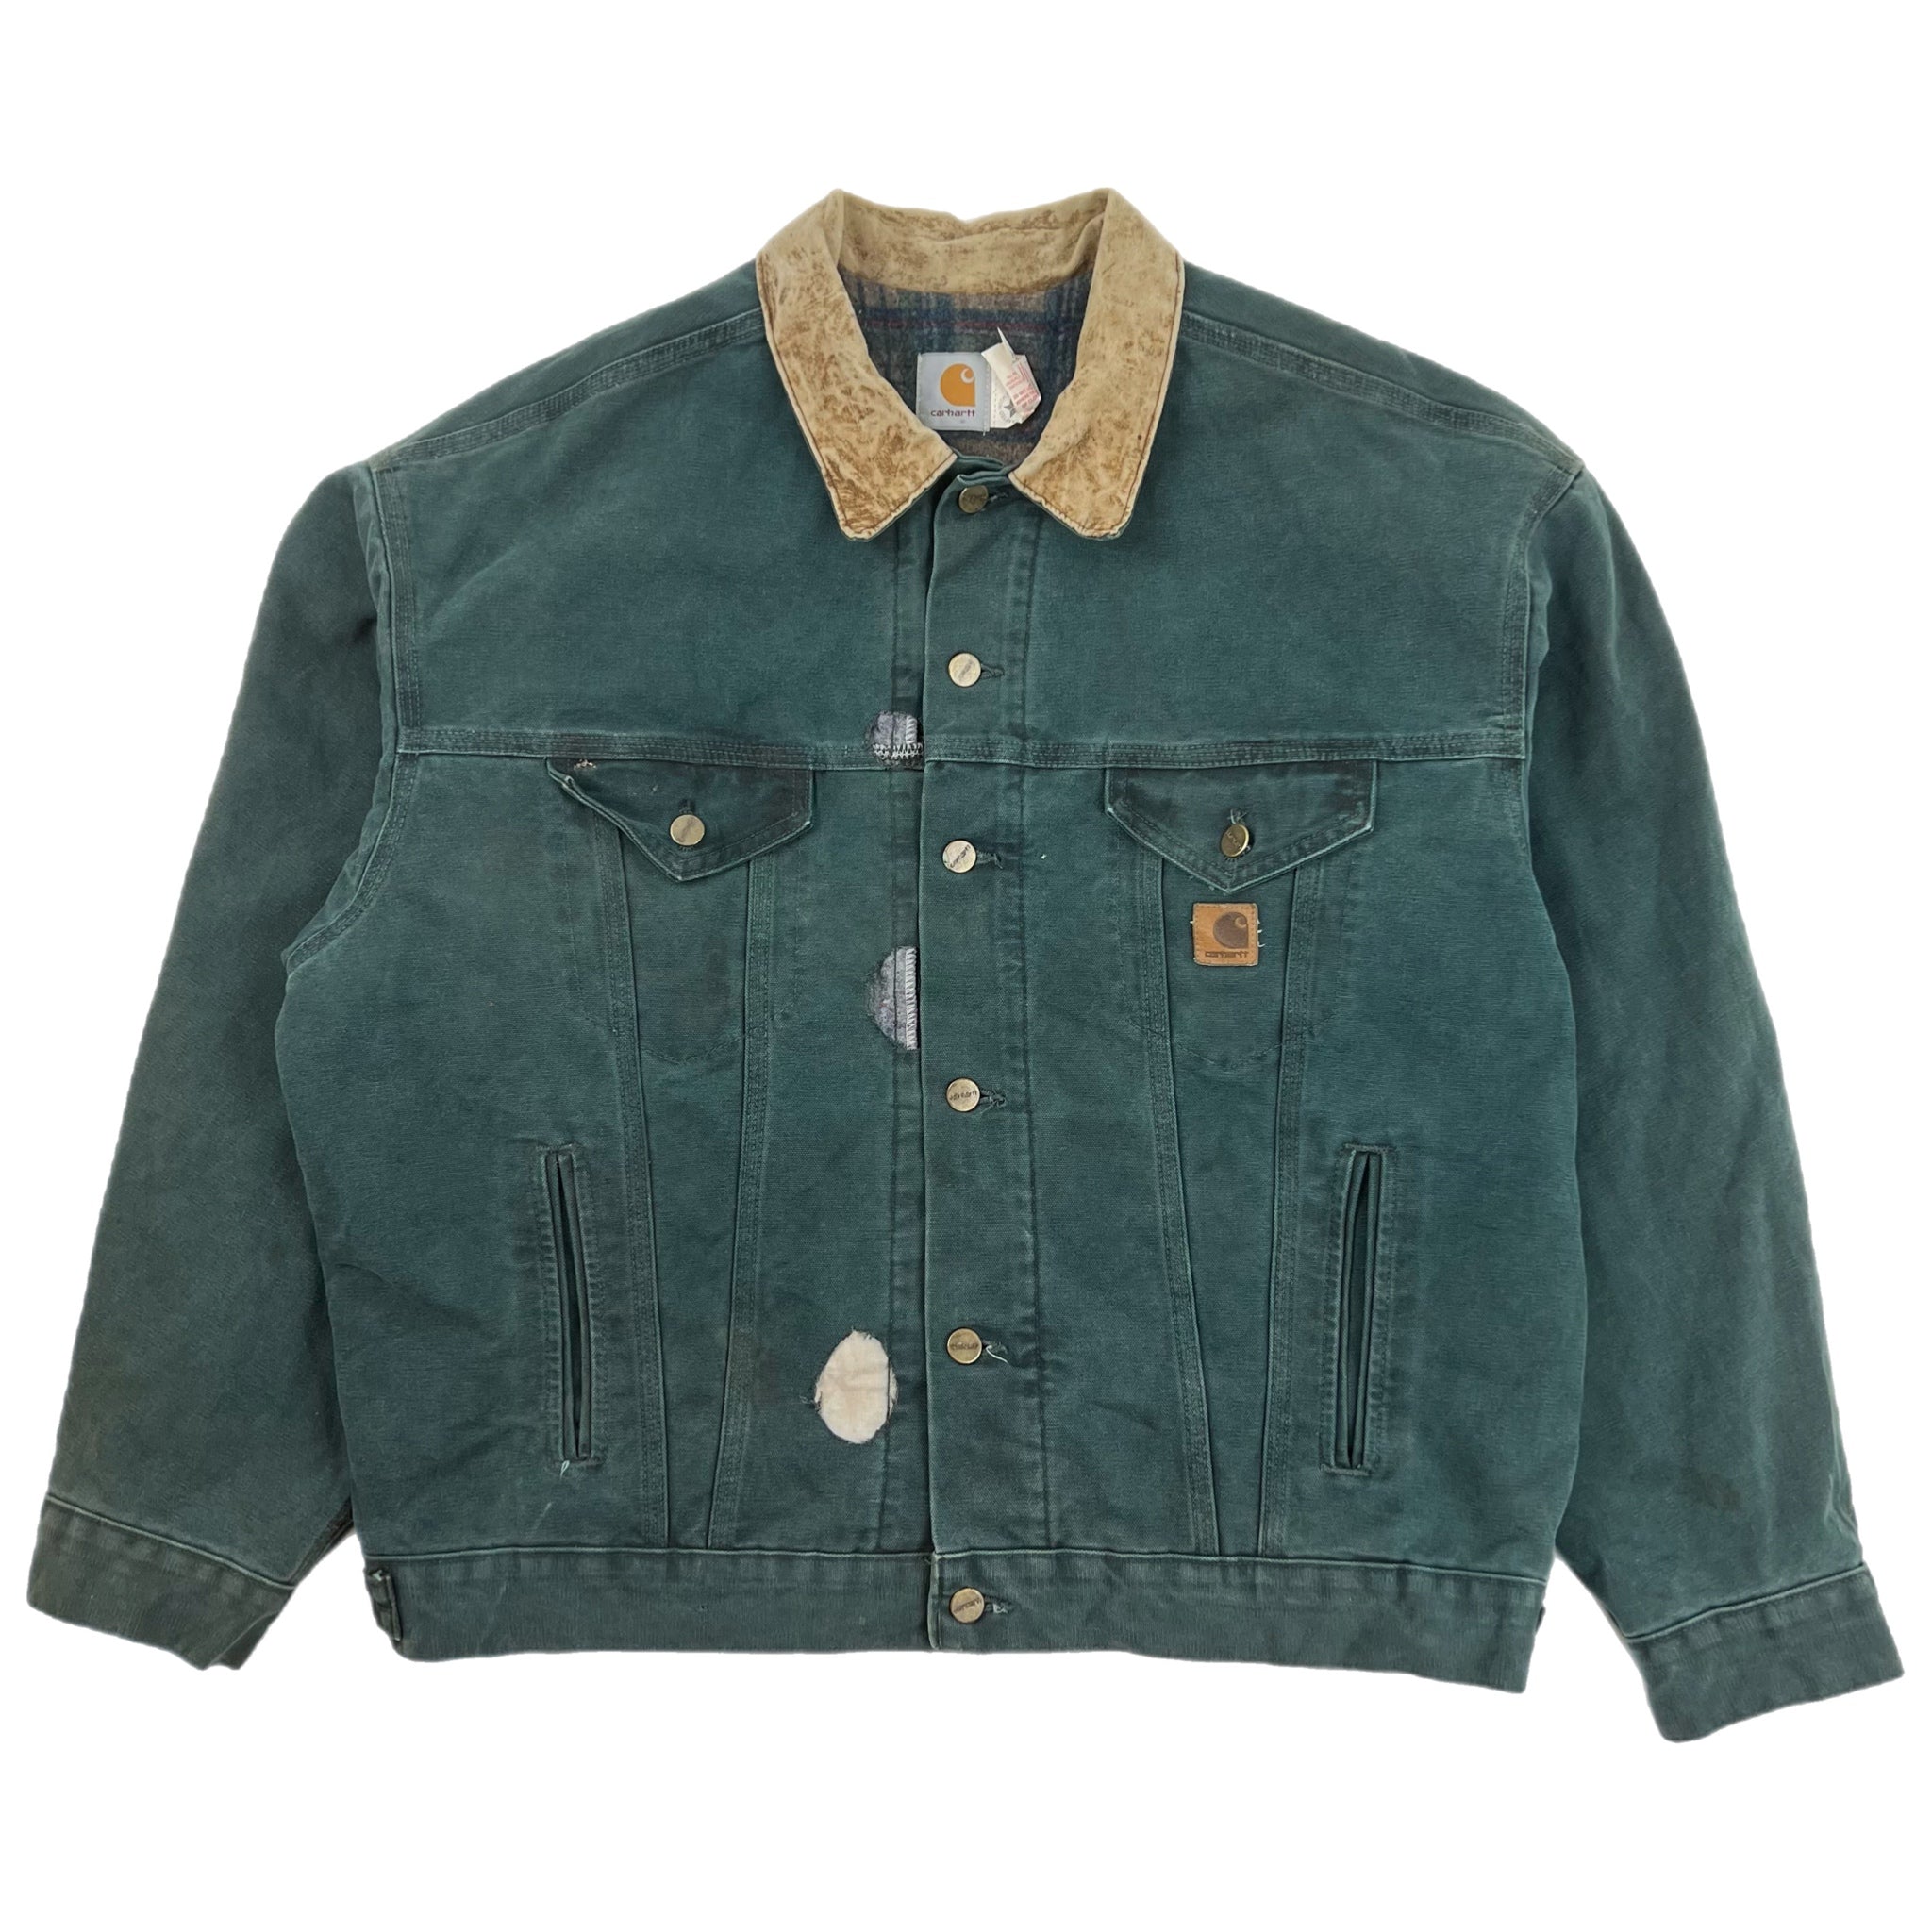 Vintage Carhartt Jacket Trucker Jacket Green